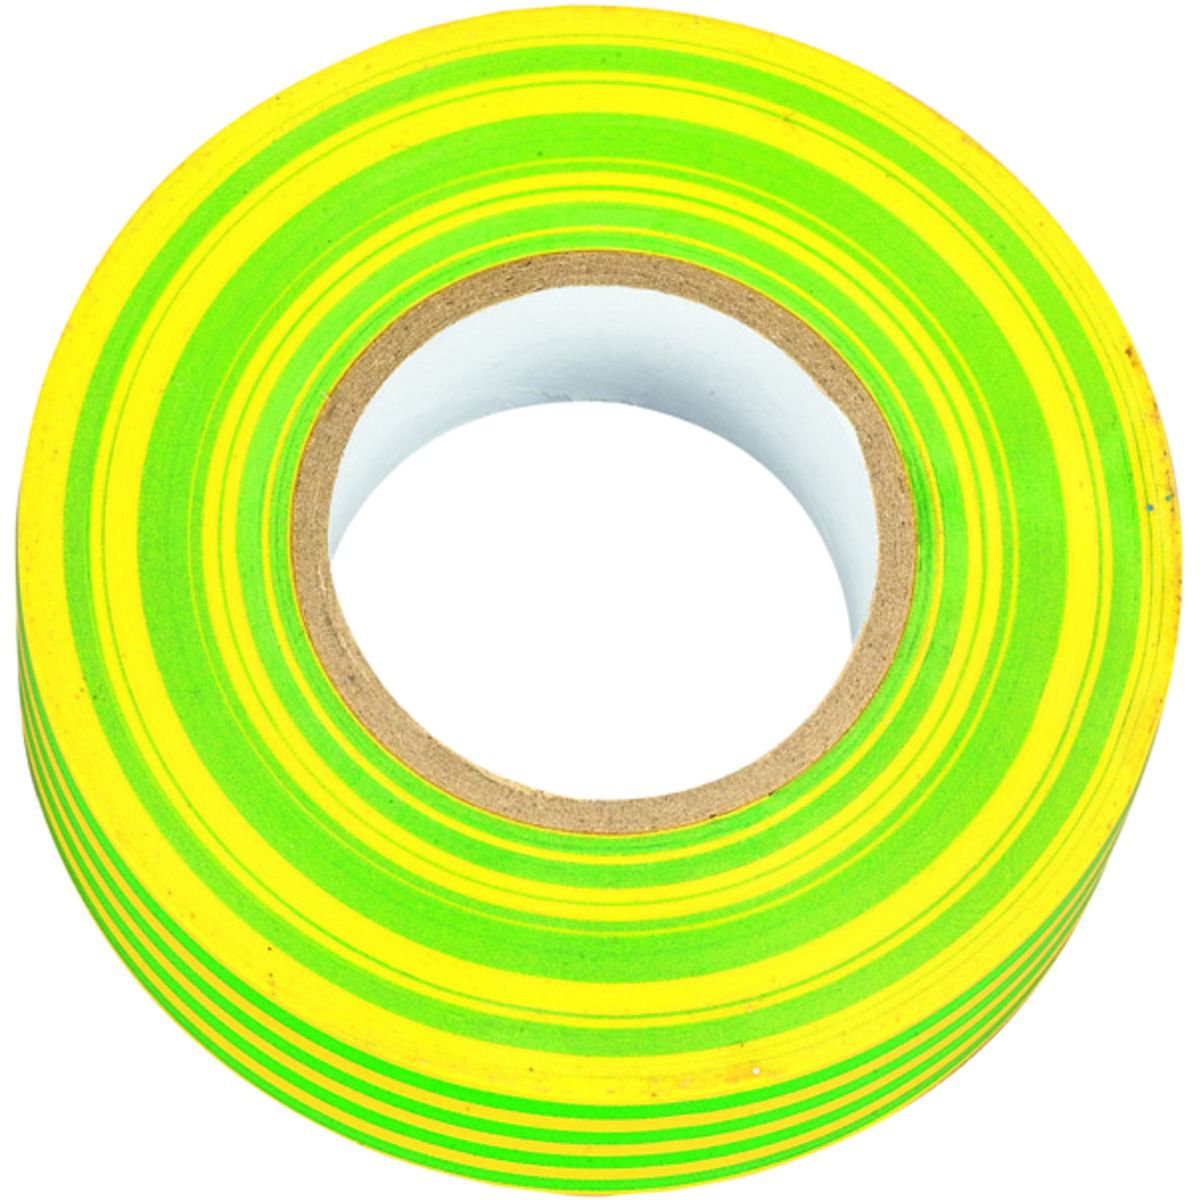 Image of Deta Green & Yellow PVC Electrical Insulation Tape - 20m x 19mm